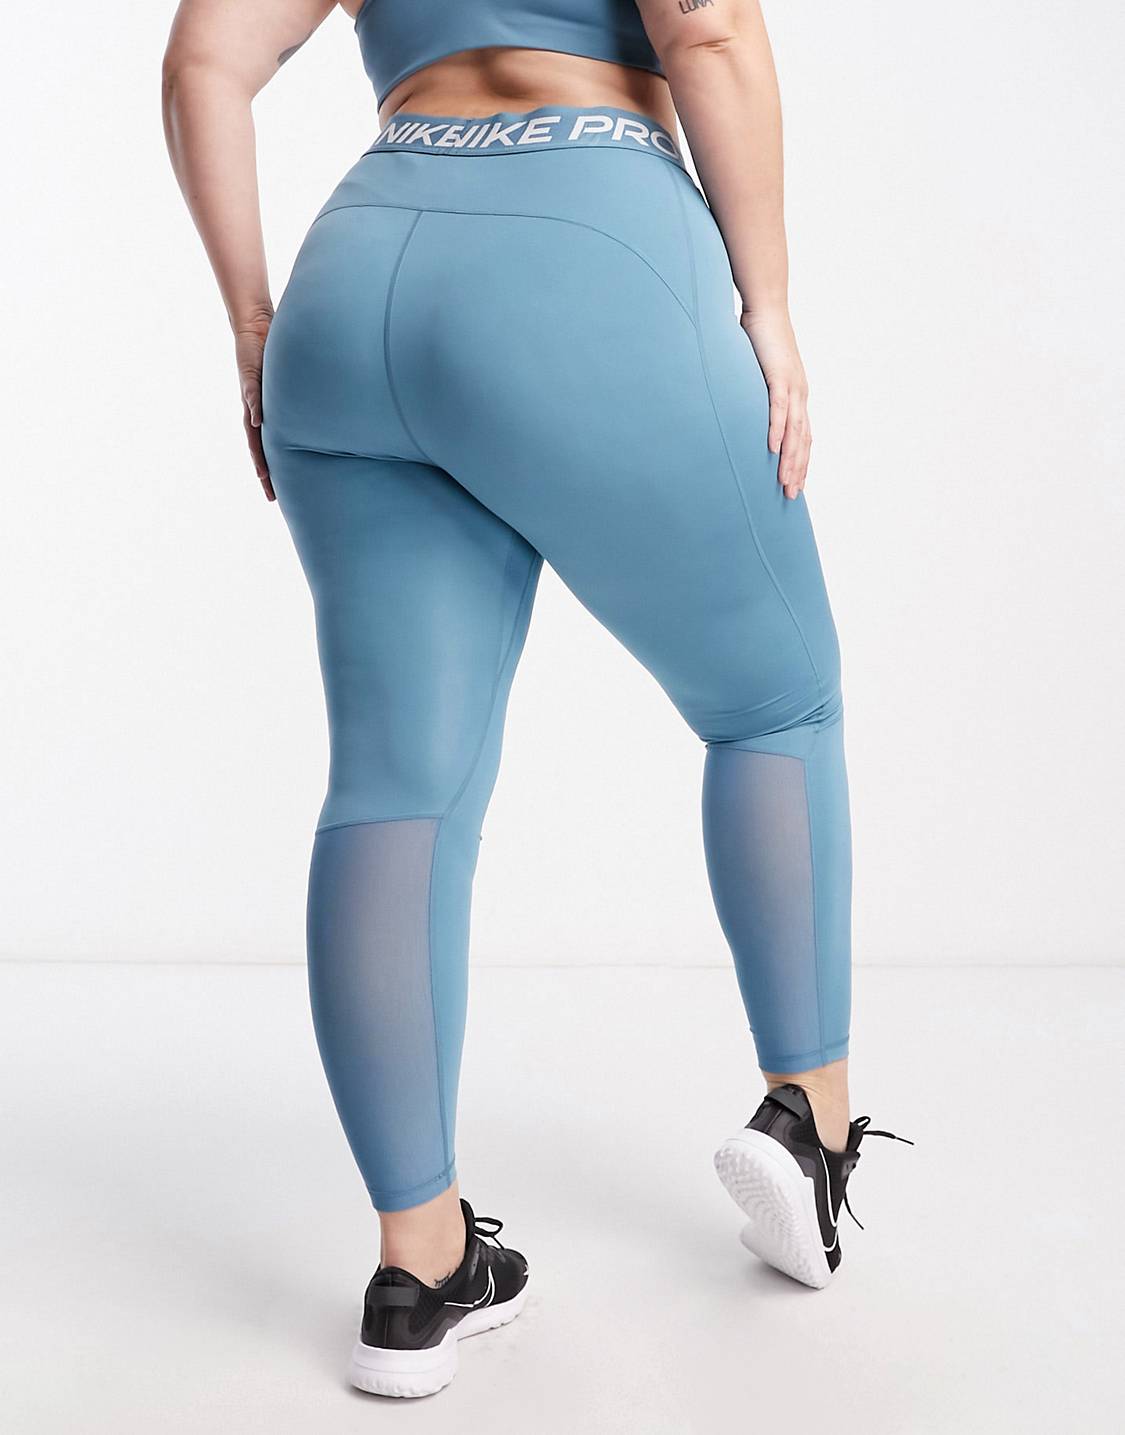 
Nike Pro Training Plus 365 high waisted leggings in aqua blue